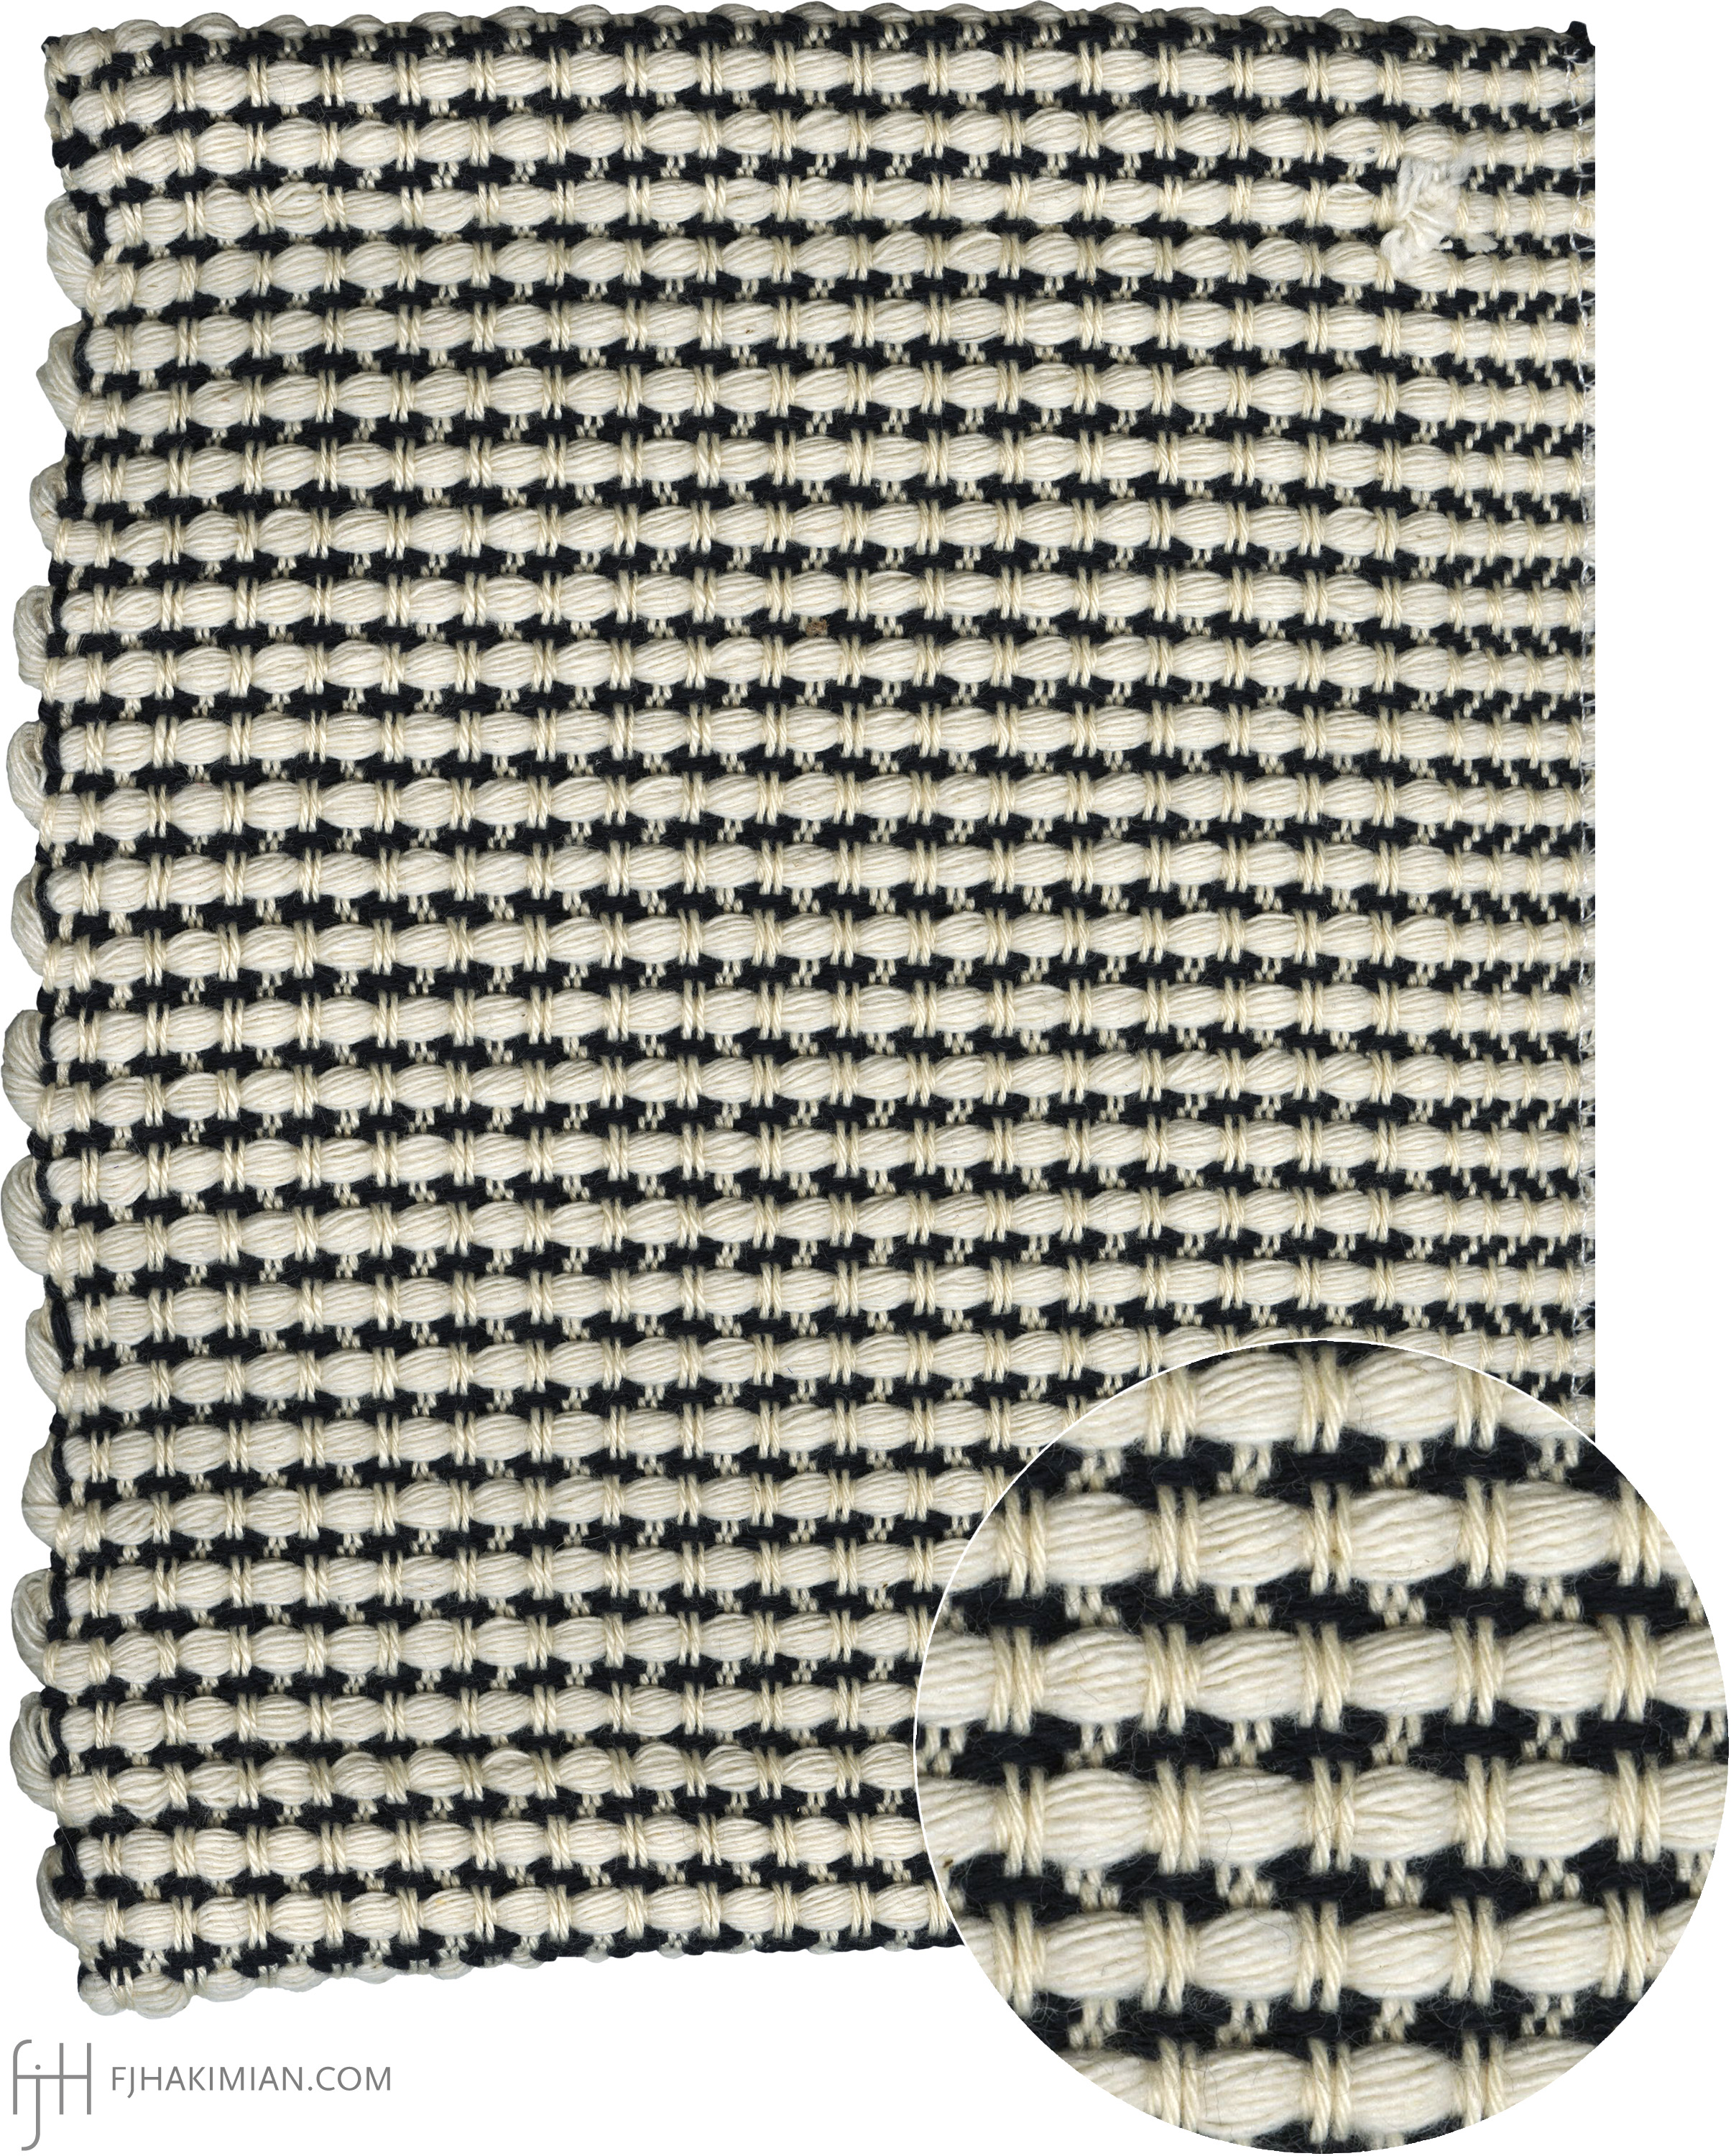 IF-Sardinian Black Design | Custom Sardinian Carpet | FJ Hakimian | Carpet Gallery in NYC